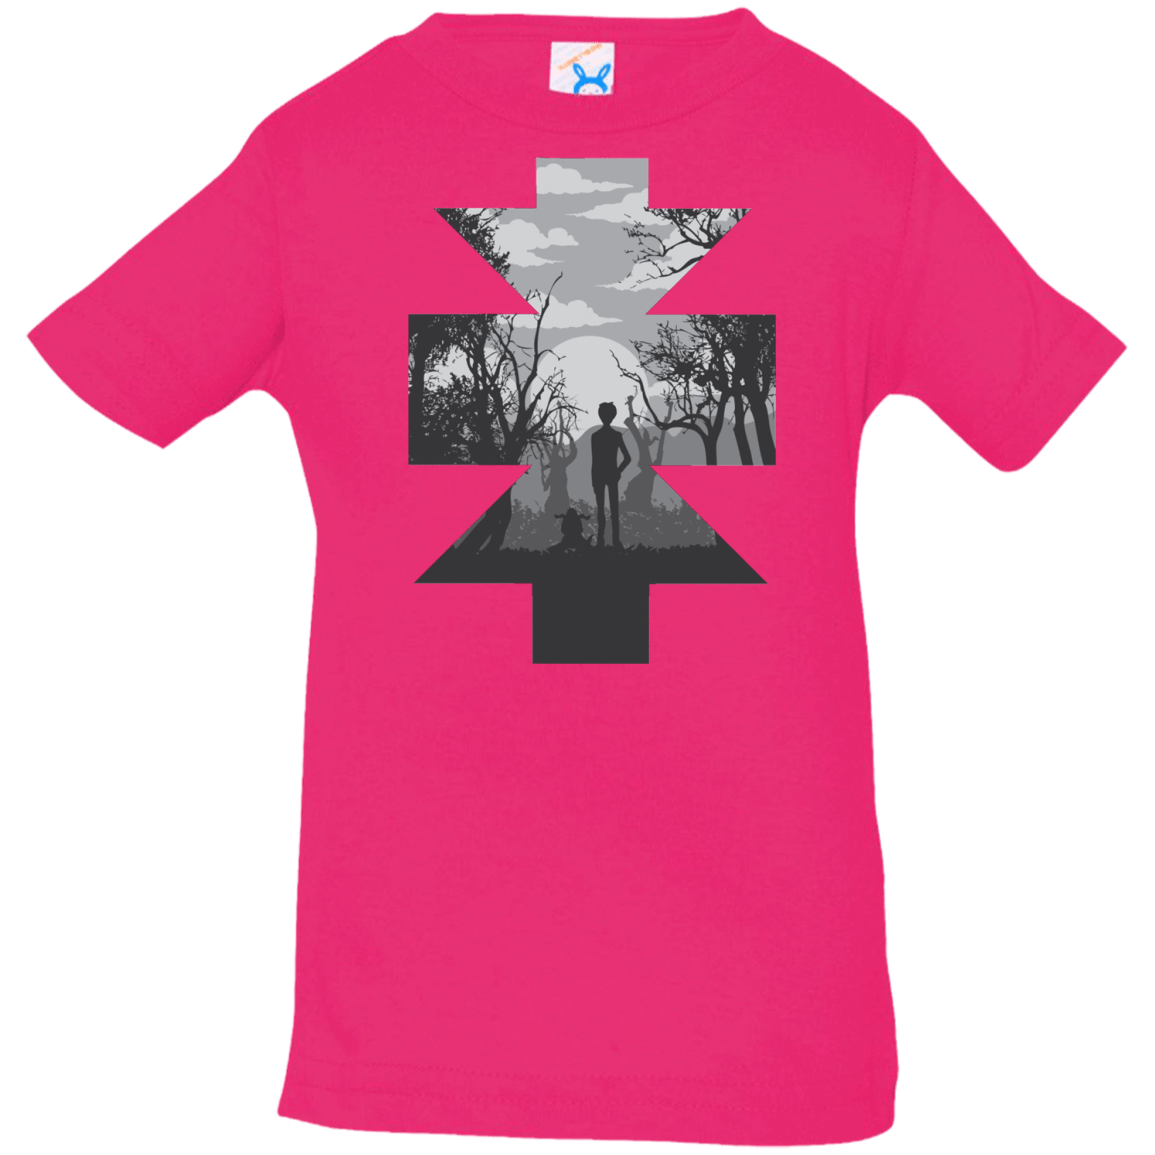 T-Shirts Hot Pink / 6 Months Reliability Infant Premium T-Shirt